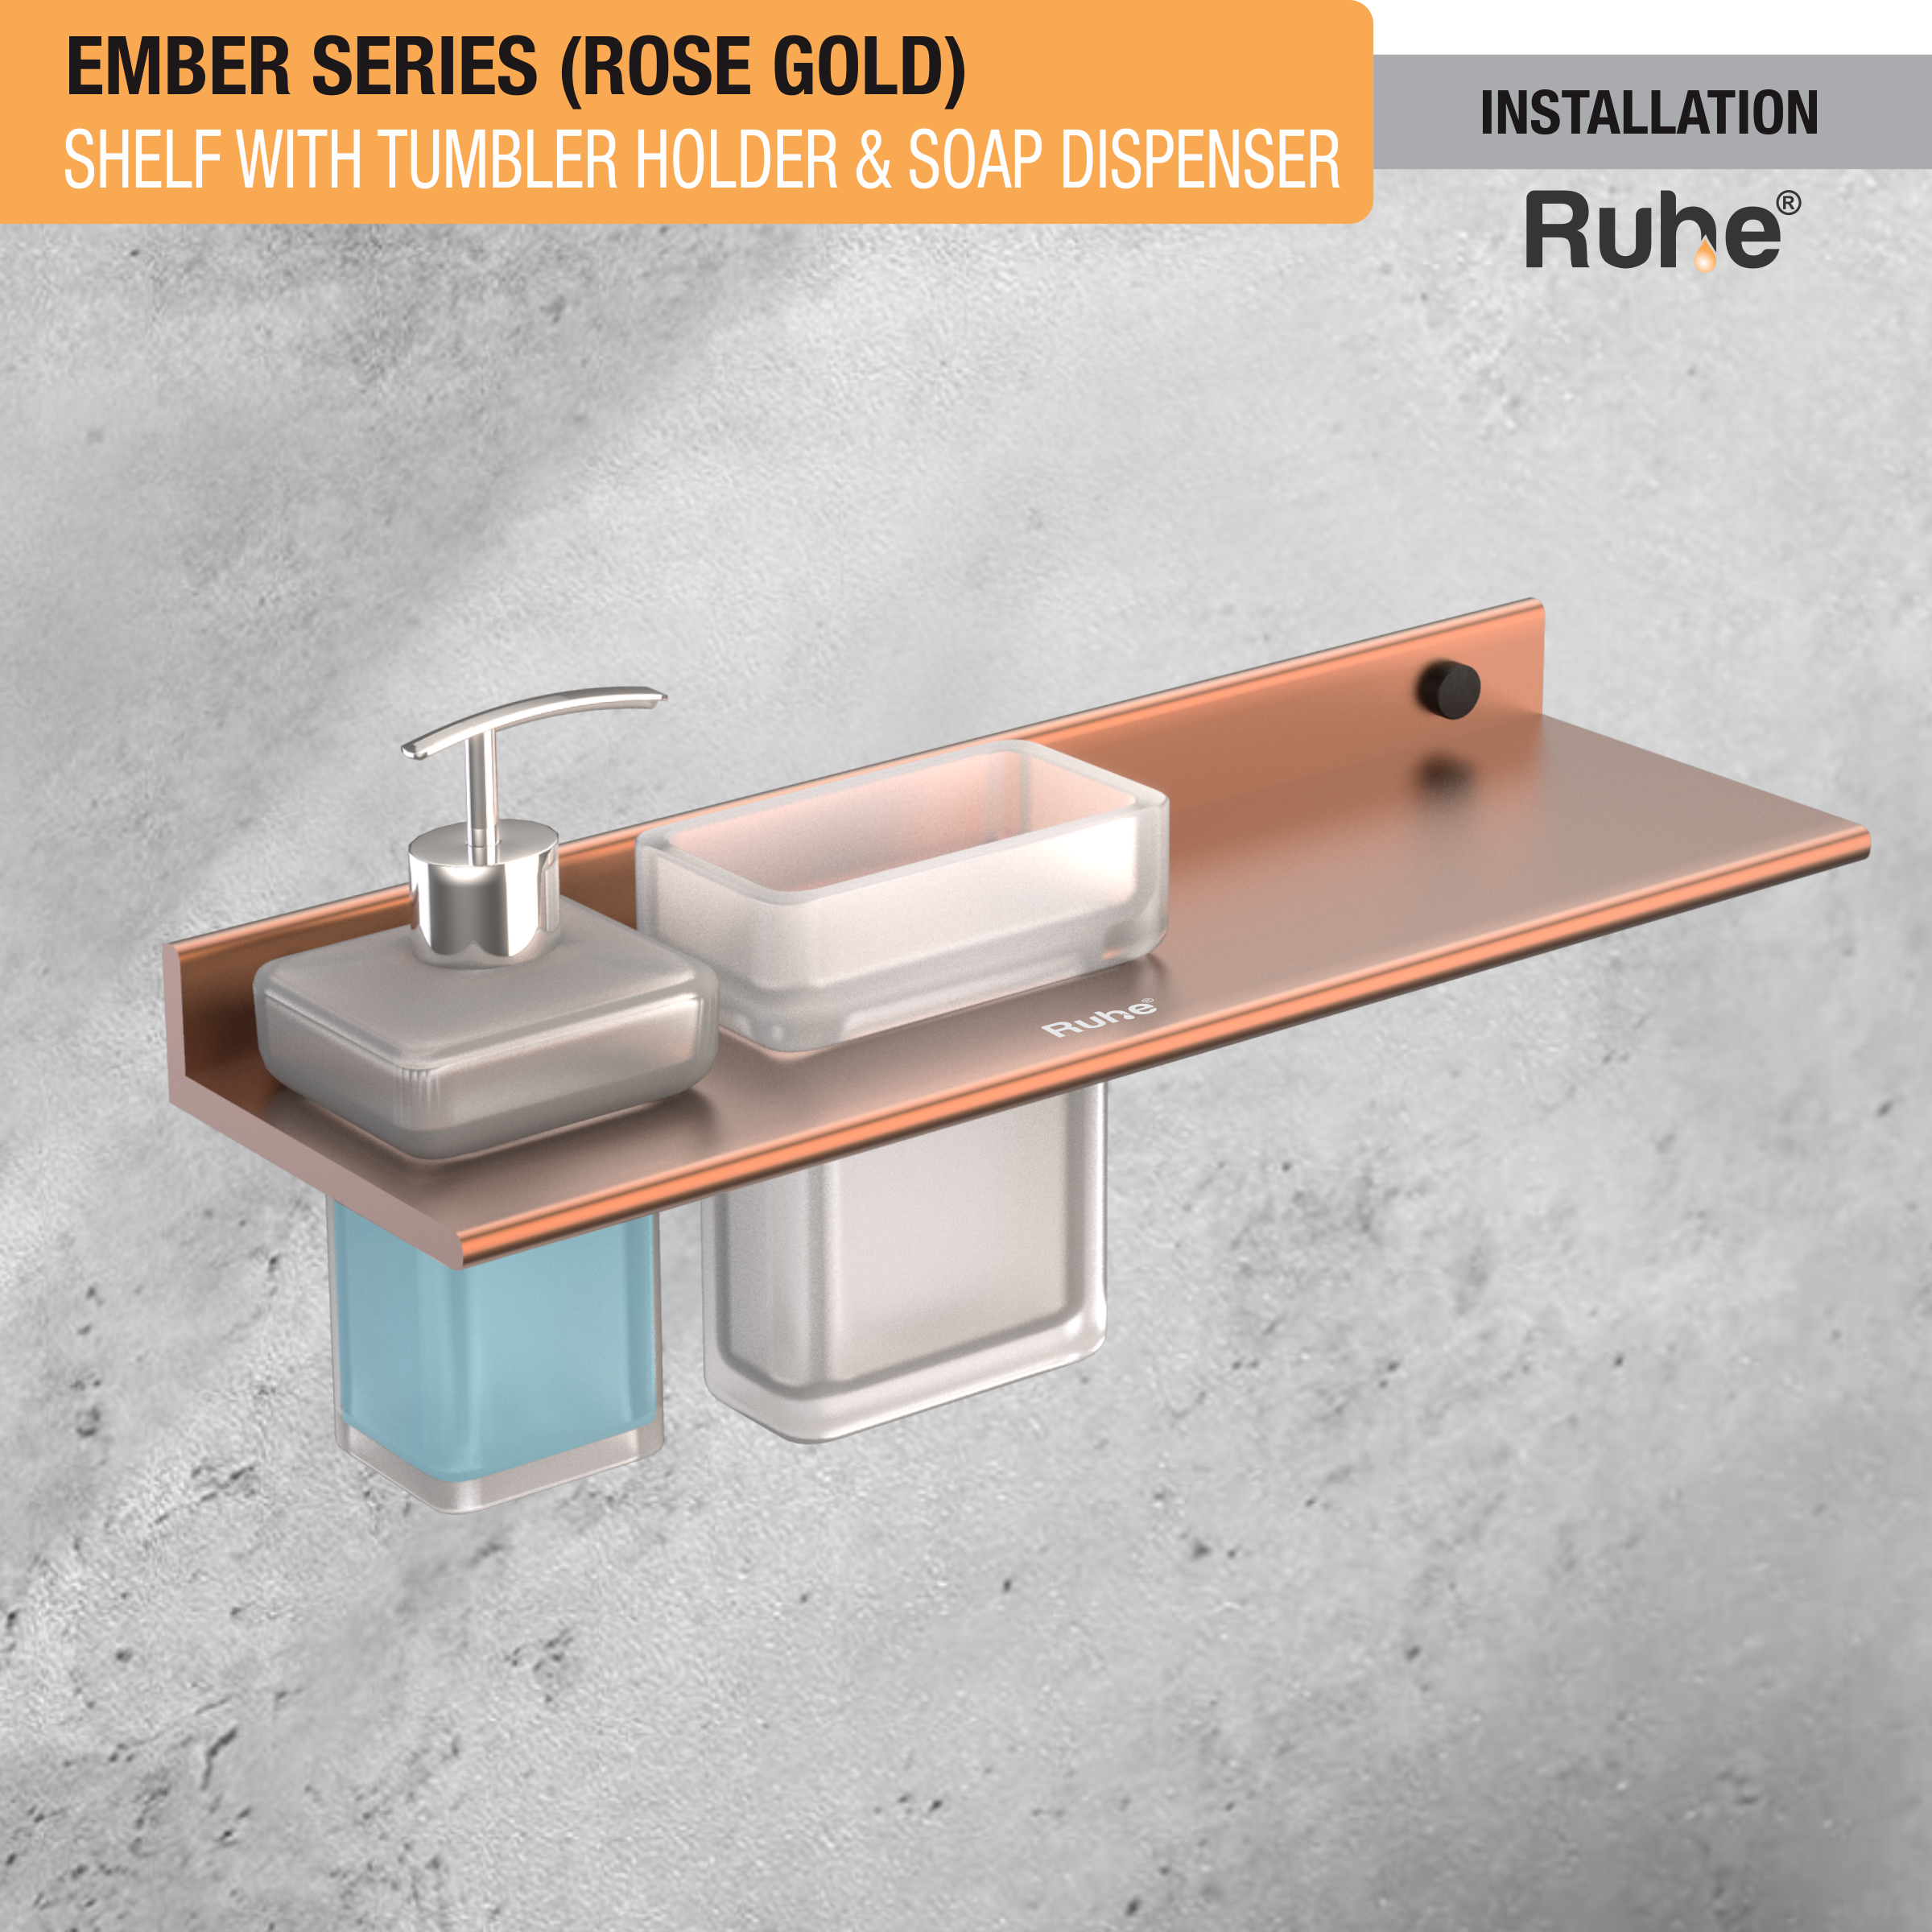 Ember Rose Gold Shelf with Tumbler Holder & Soap Dispenser (Space Aluminium) installation